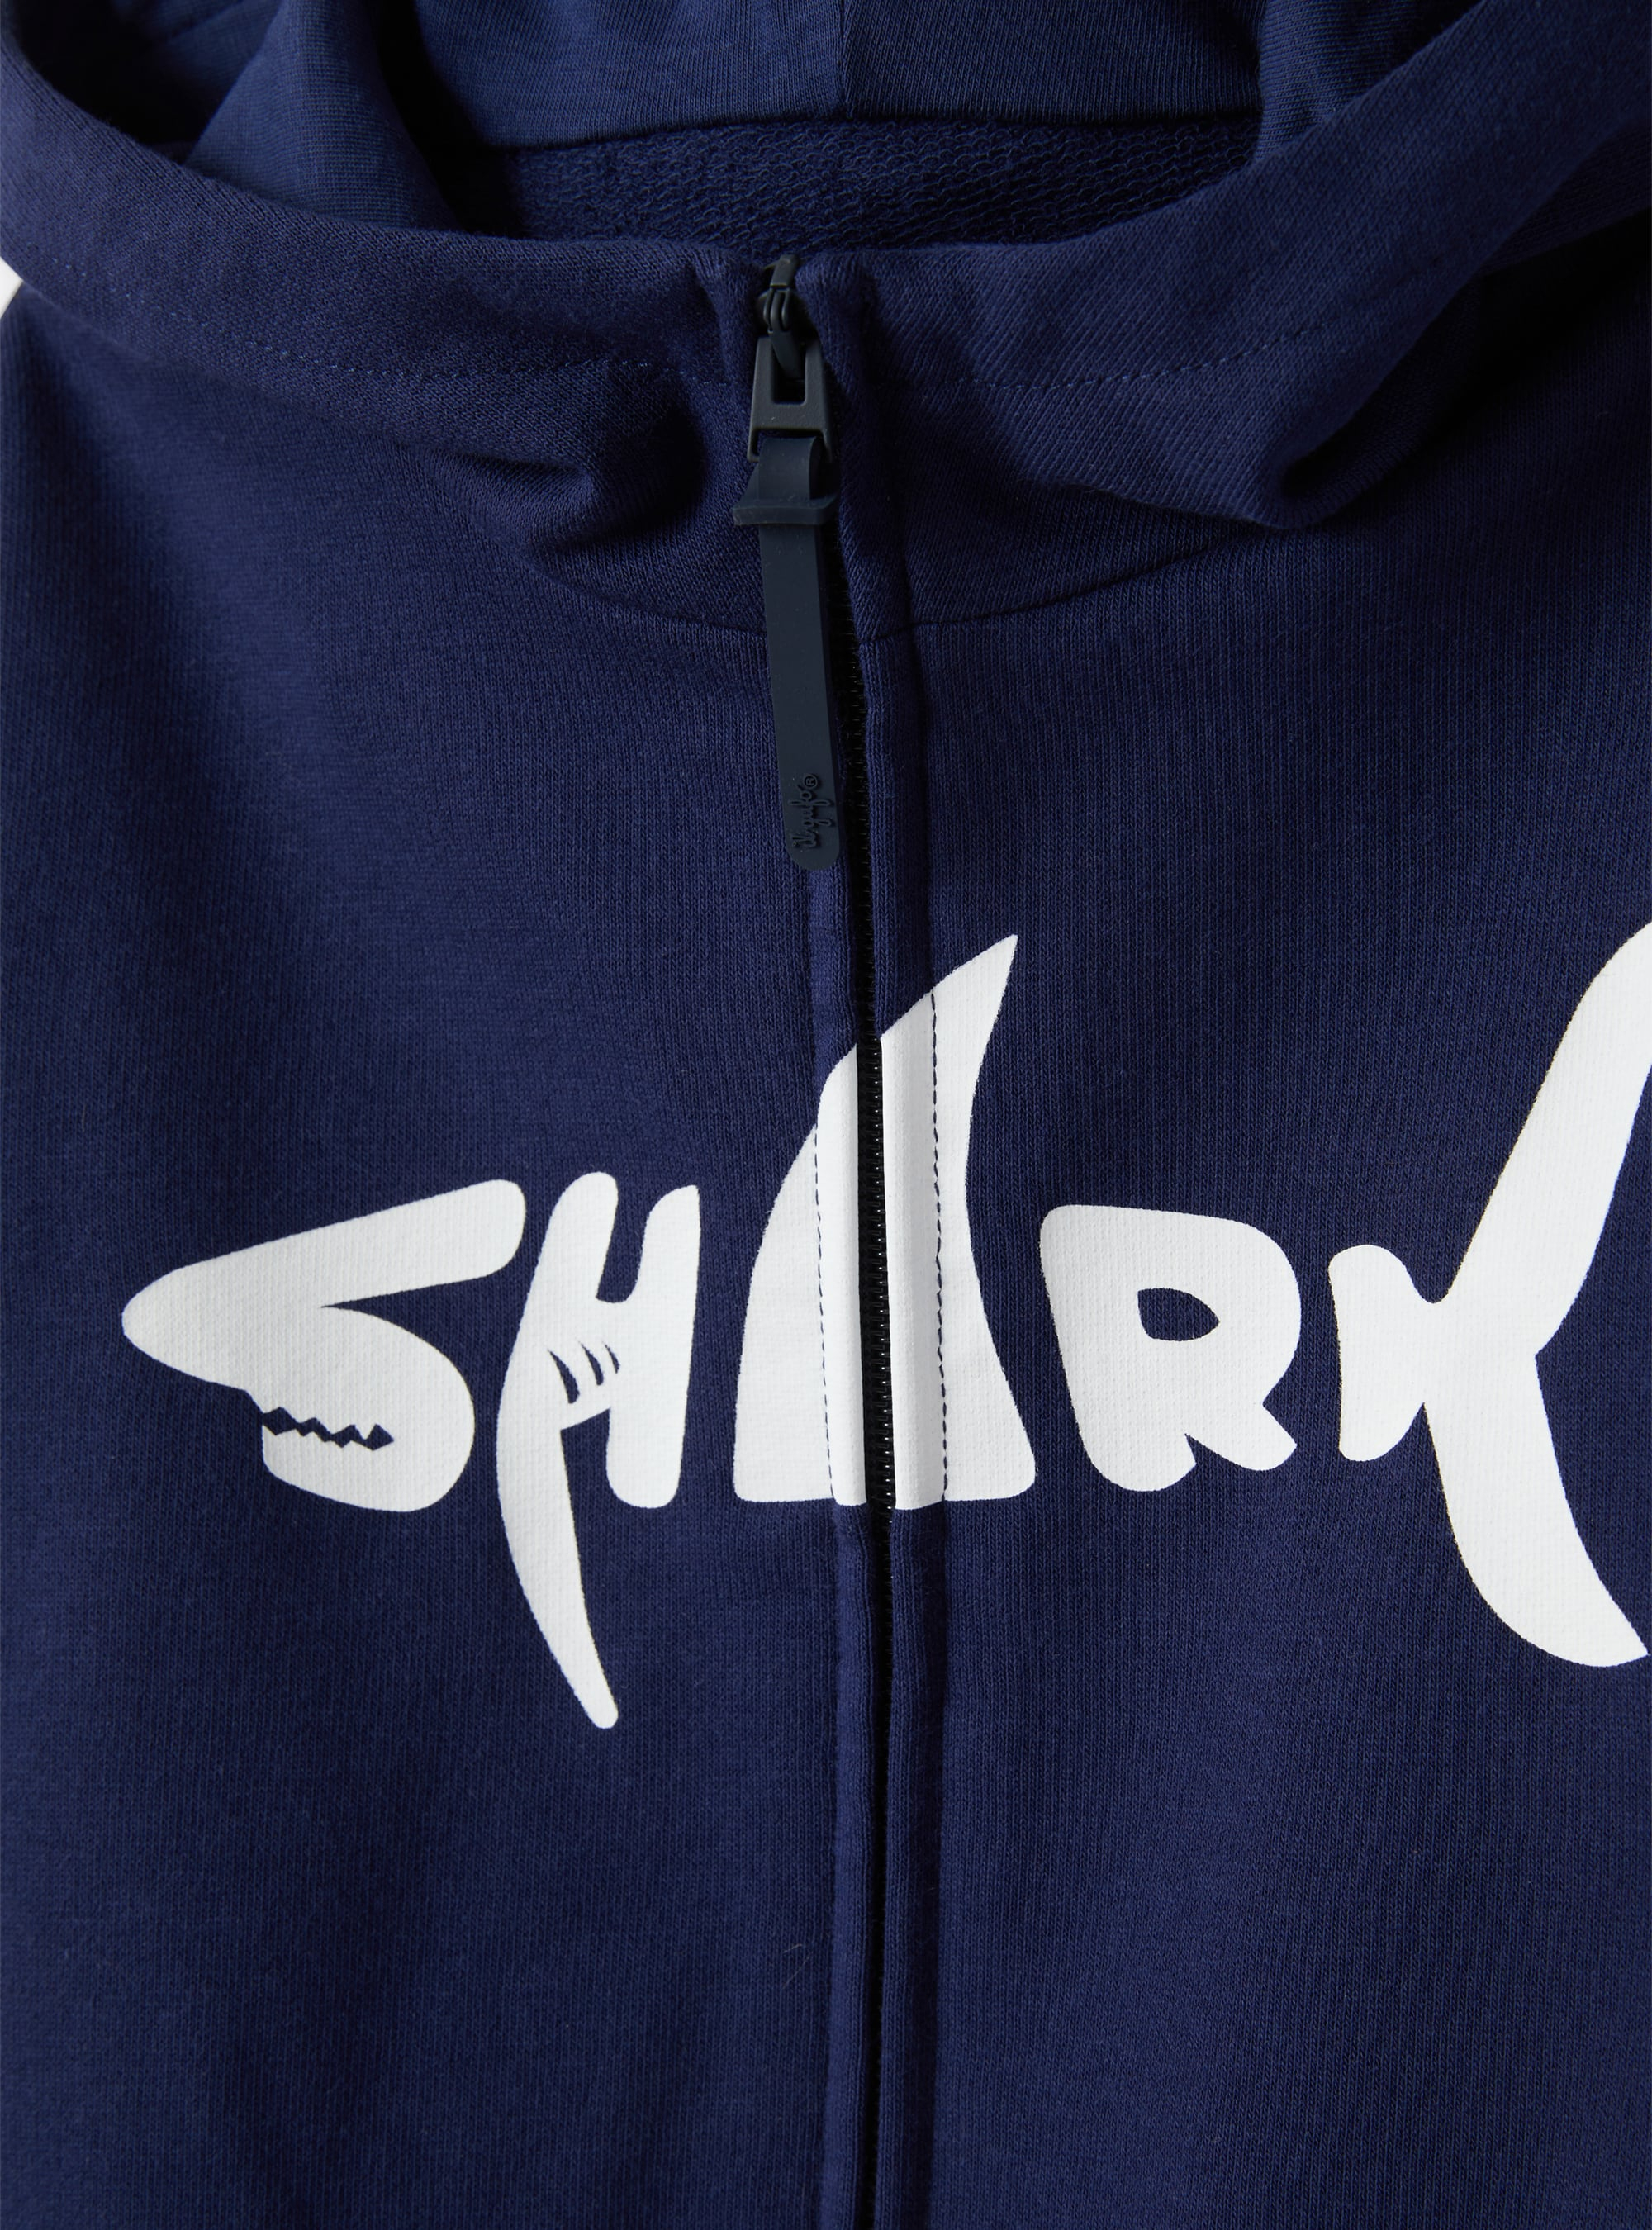 Zip-front sweatshirt with shark print - Blue | Il Gufo